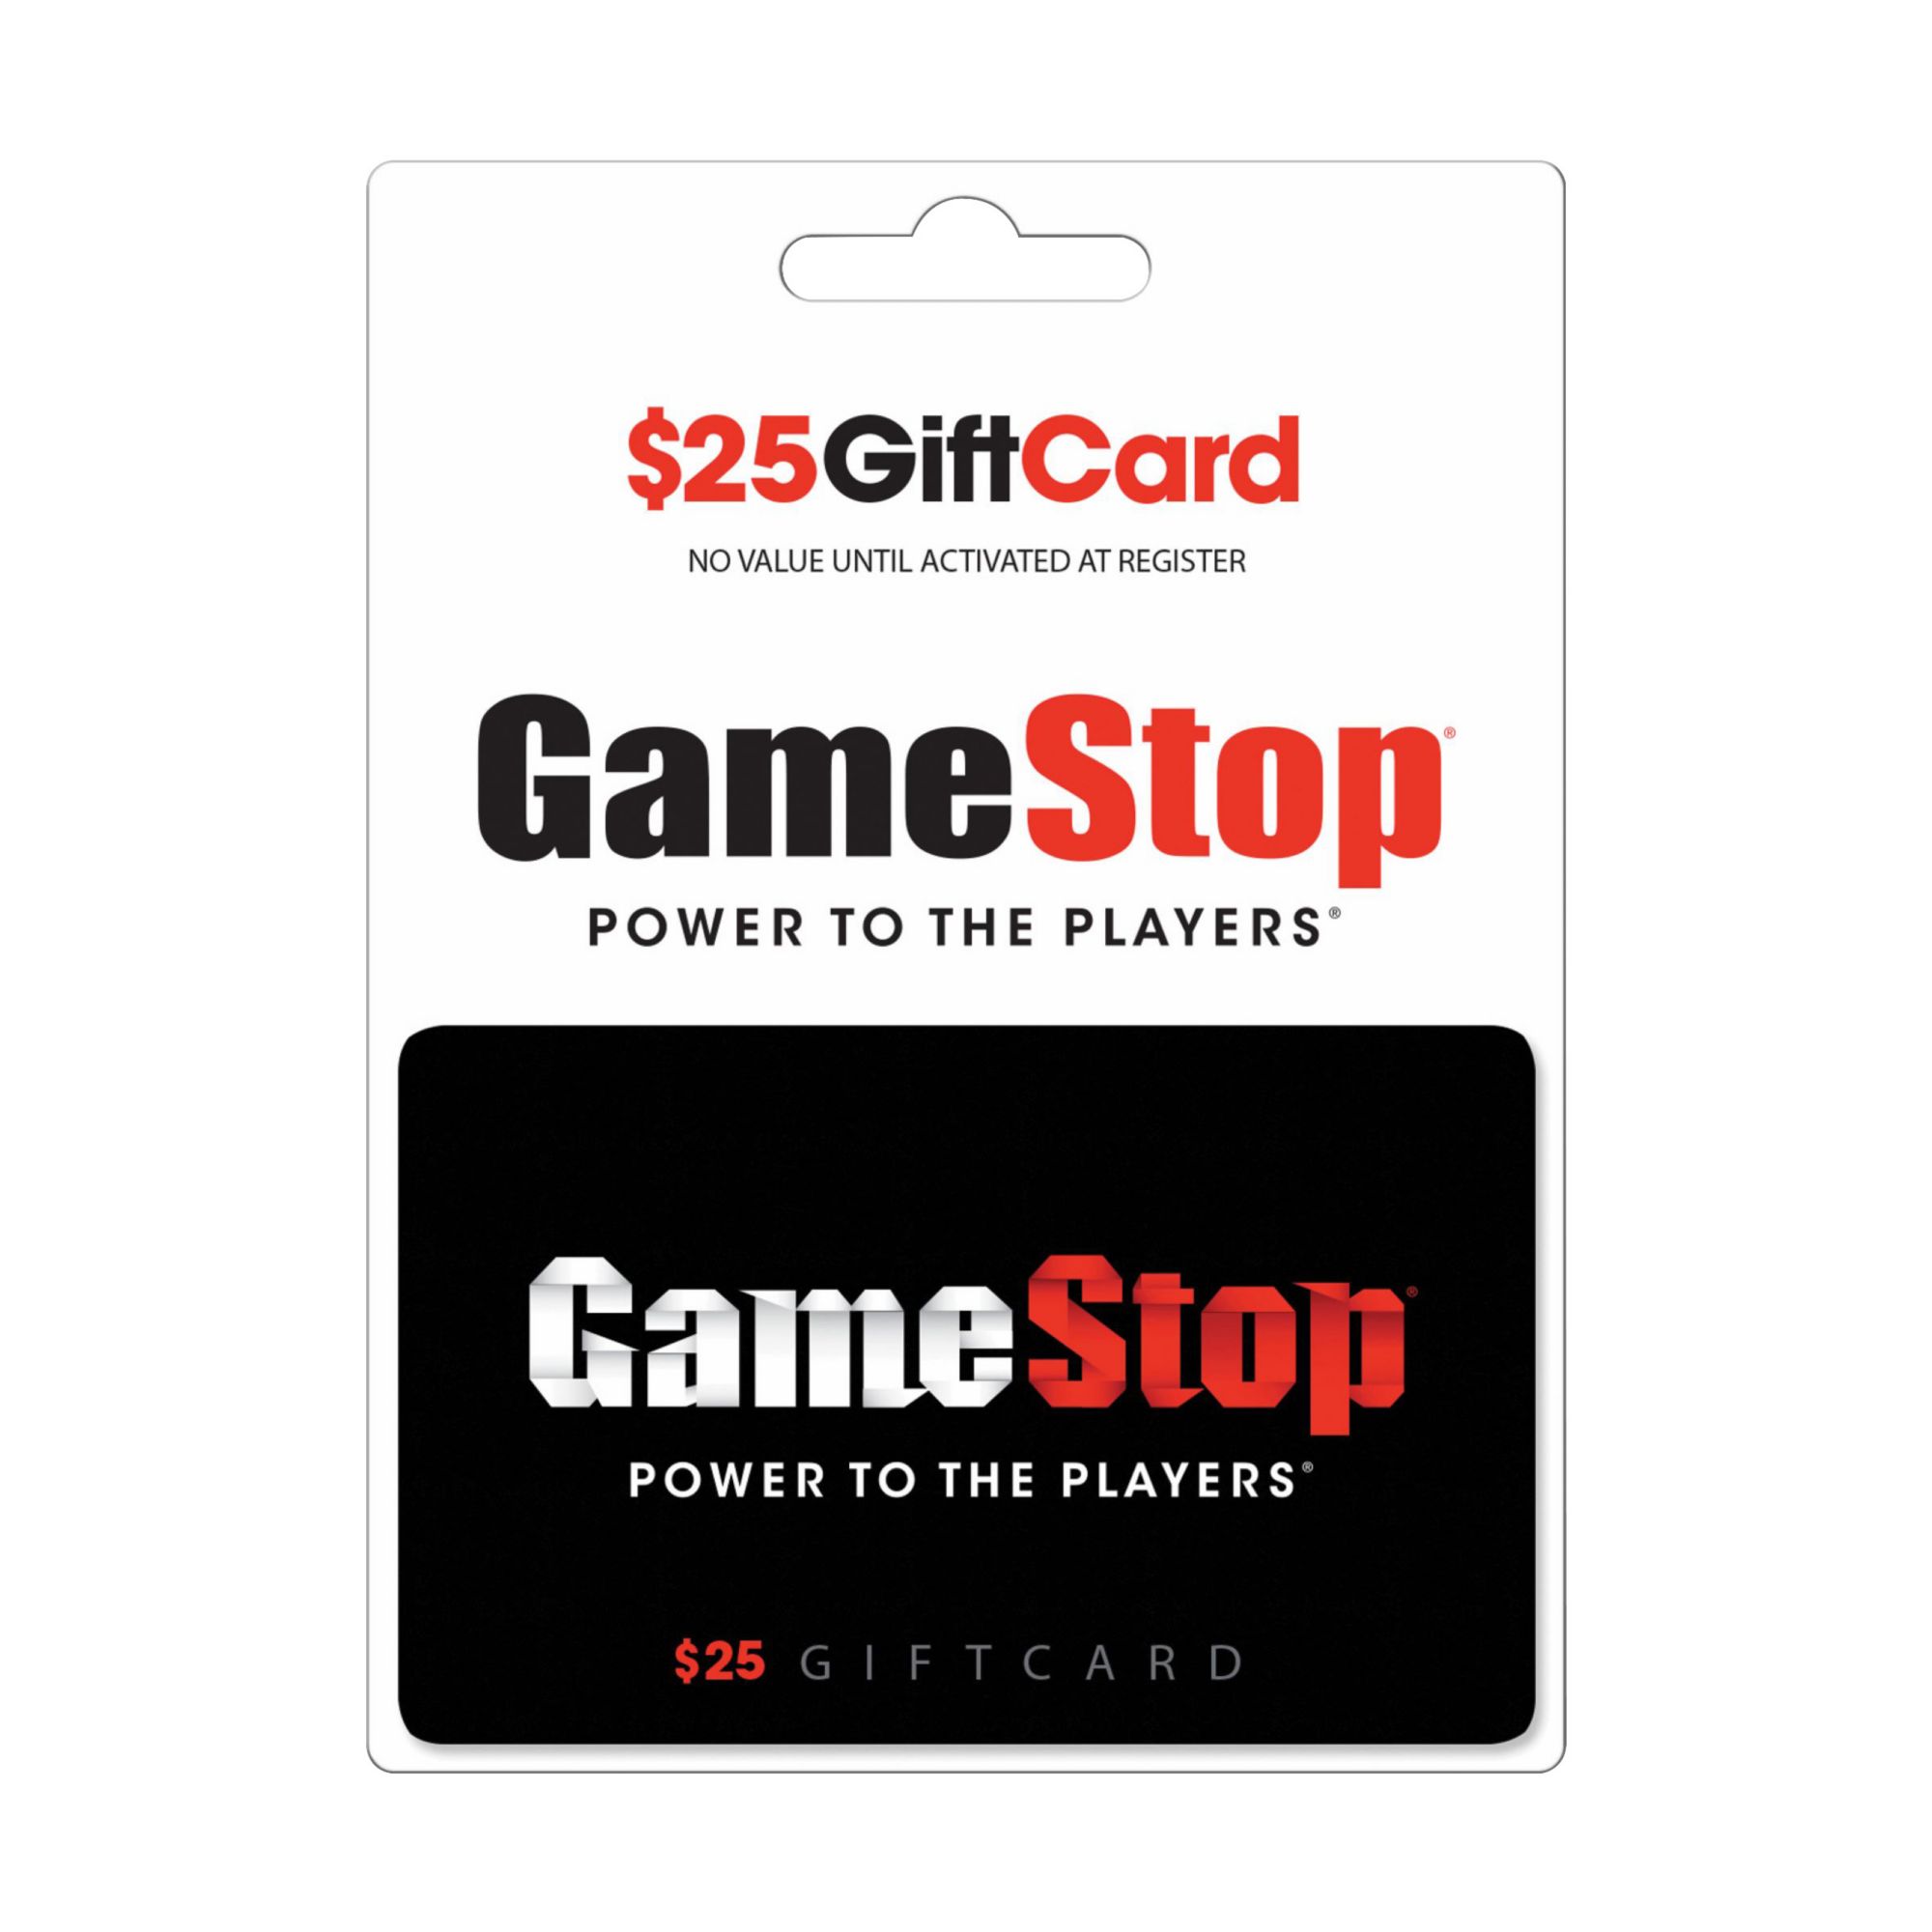 Gamestop Gift Card Balance Check : u/Gift-services